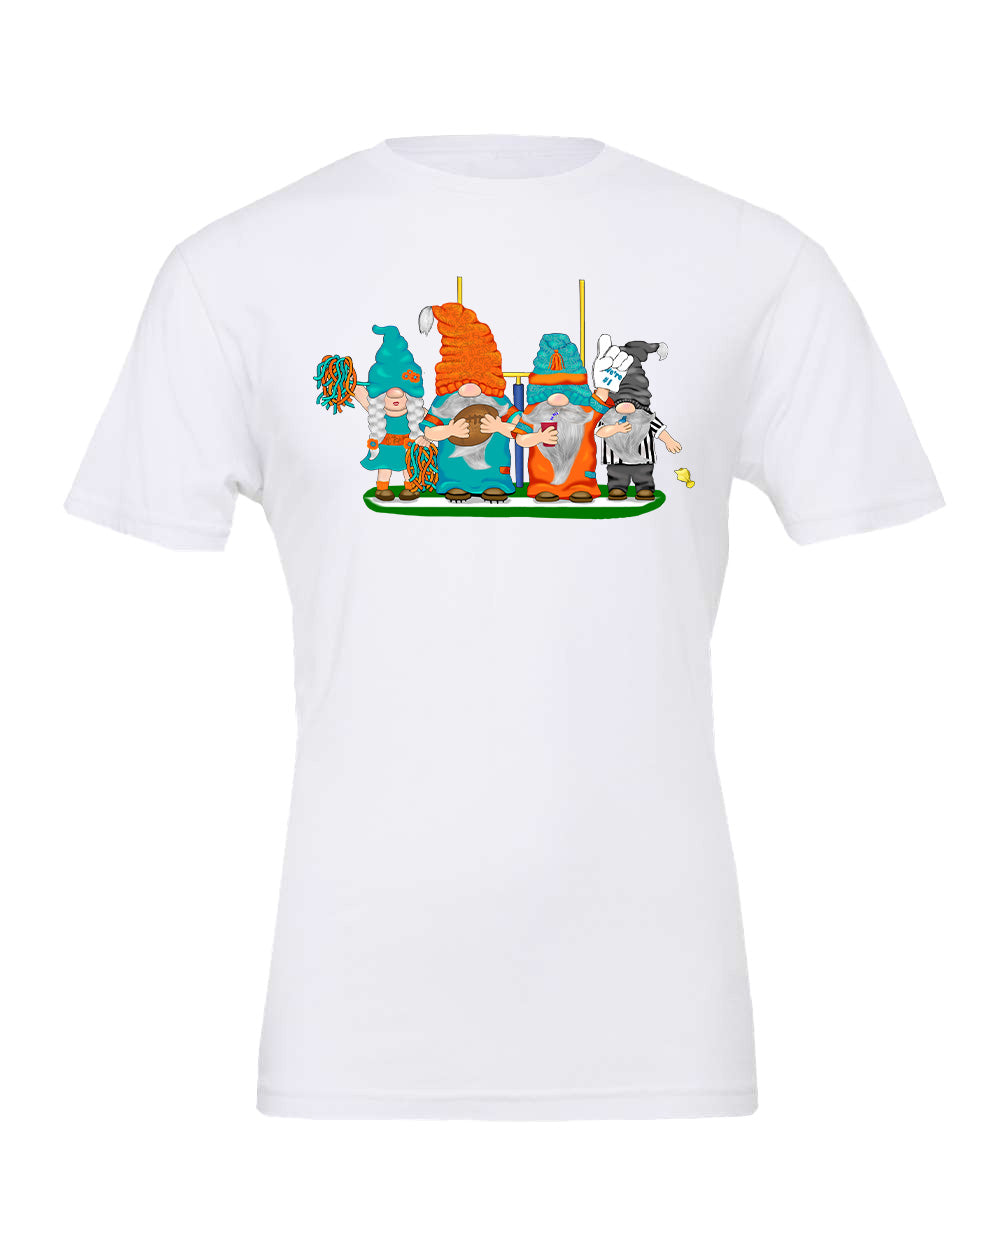 Aqua & Orange Football Gnomes on Men's T-shirt (similar to Miami)